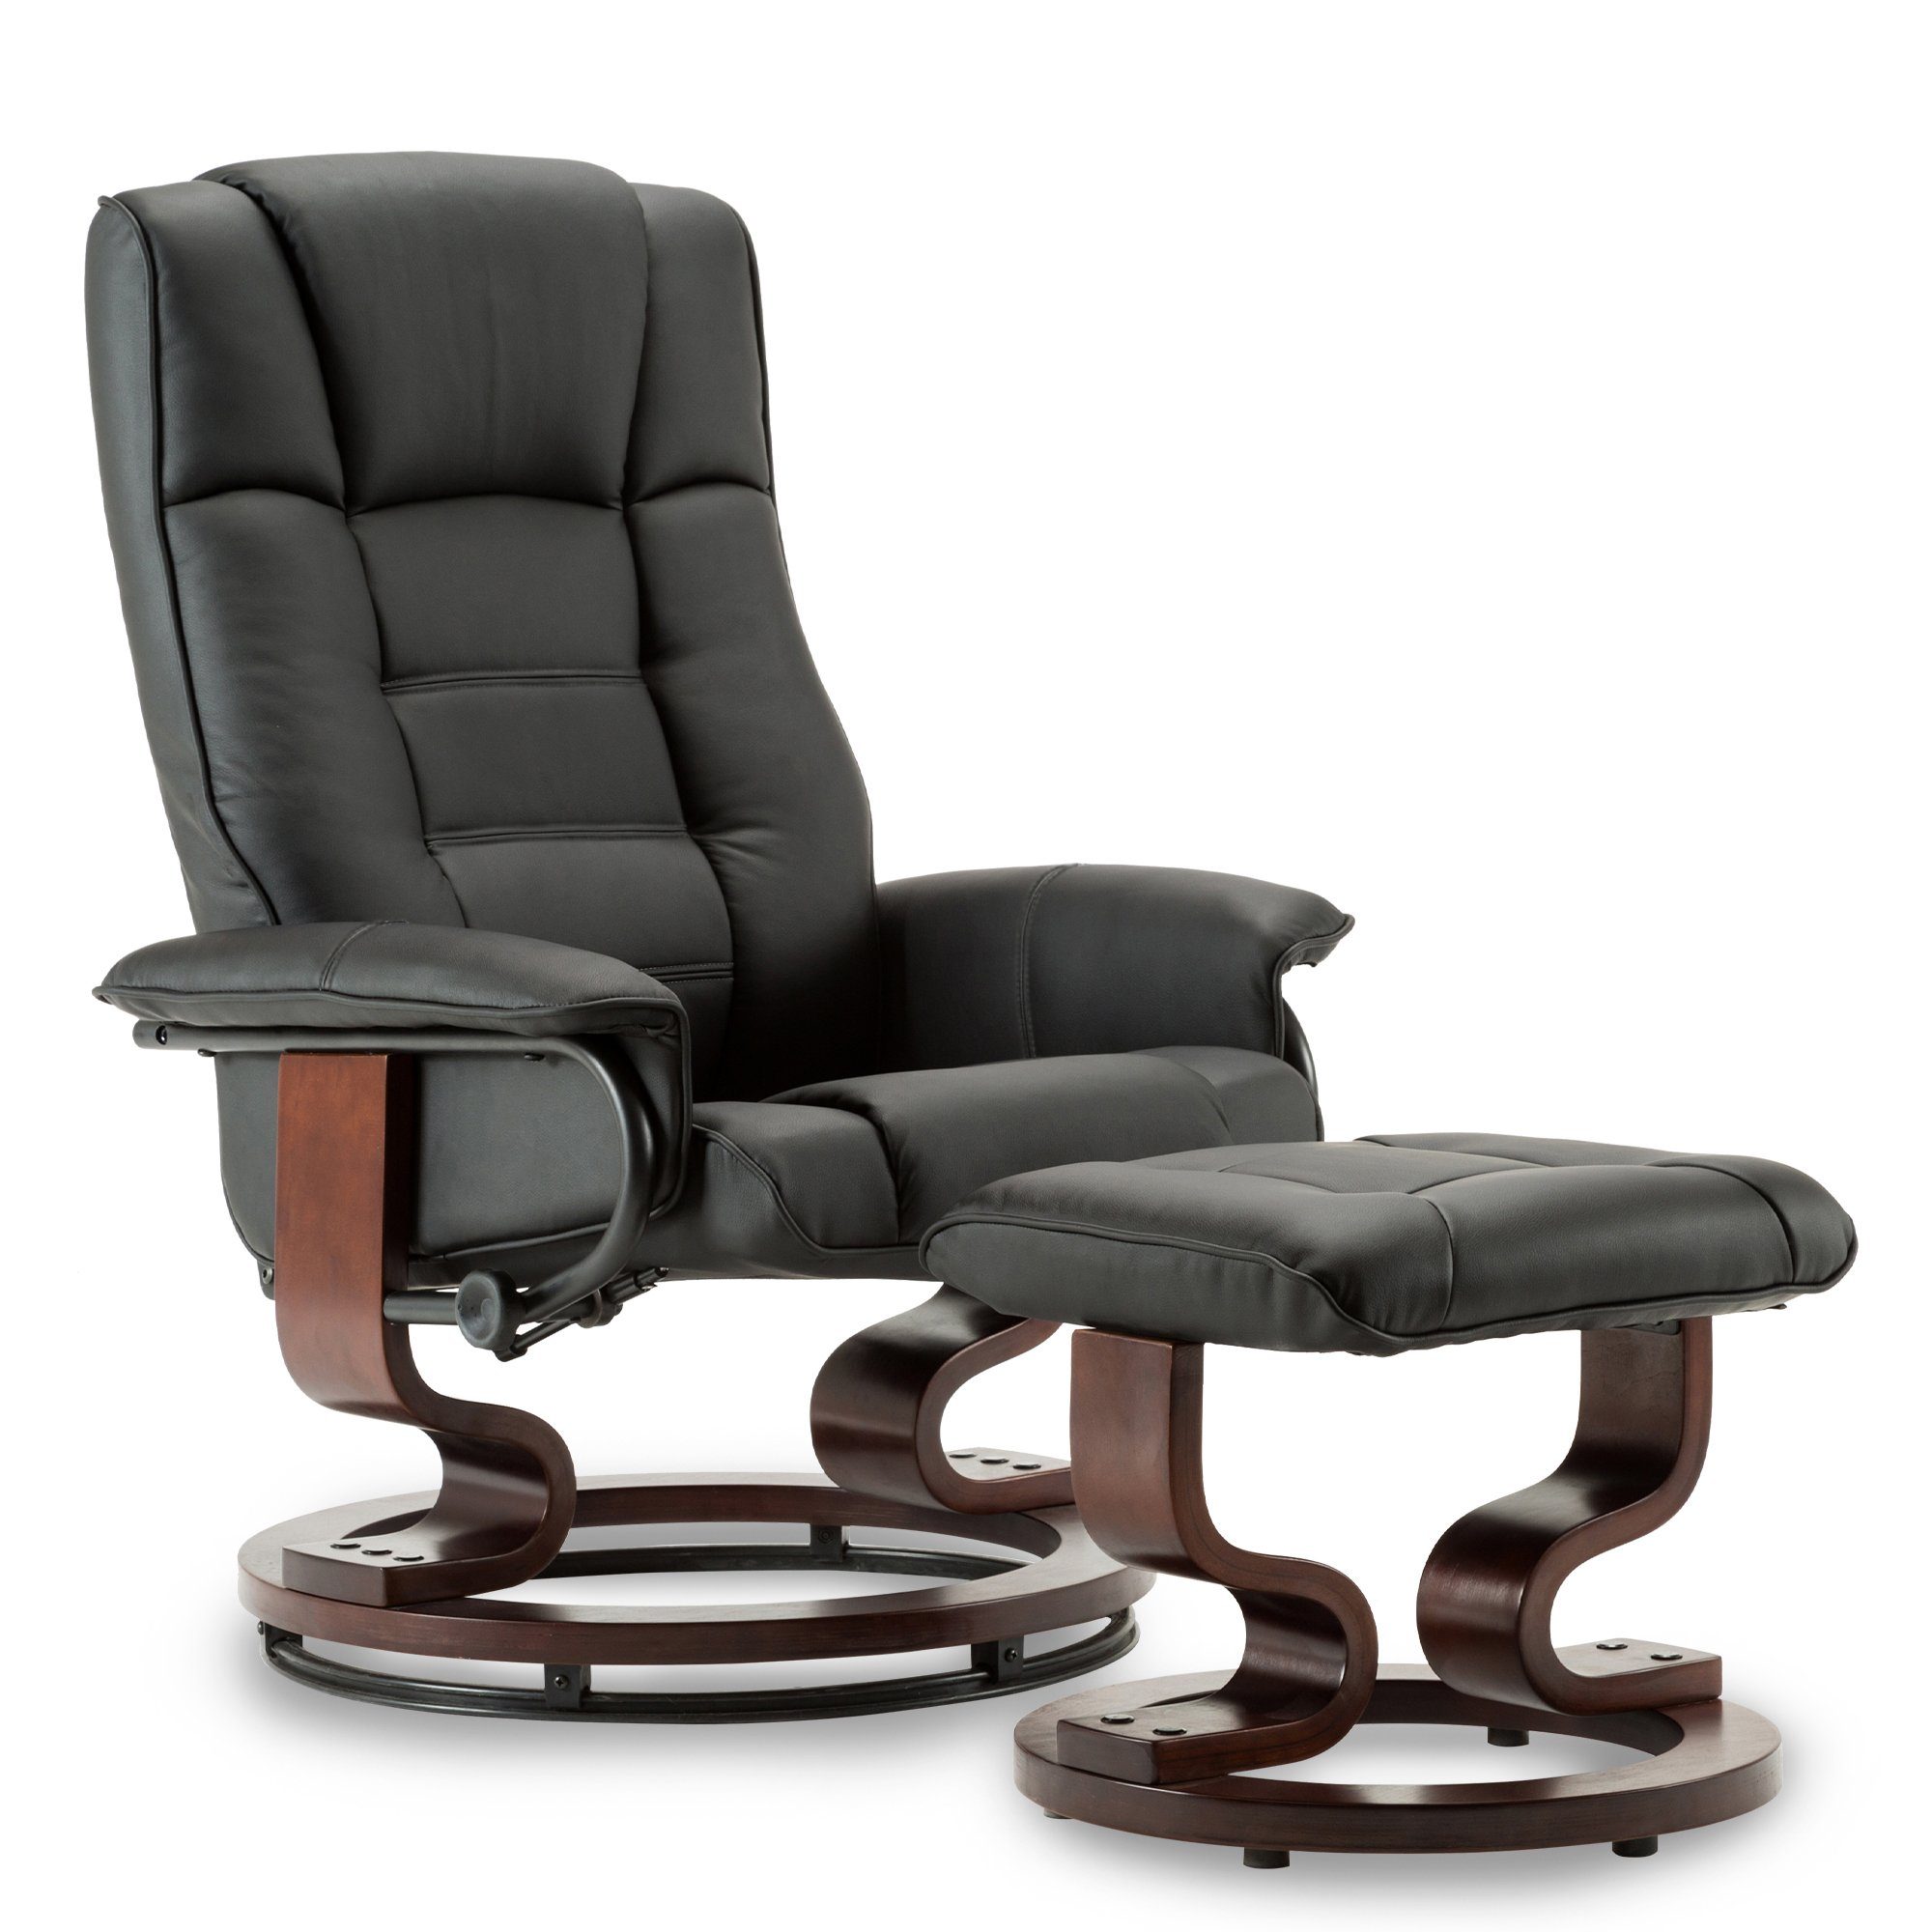 MCombo TV-Sessel MCombo Relaxsessel mit Hocker 9019, 360°drehbarer Крісла mit Liegefunktion, mit Hocker